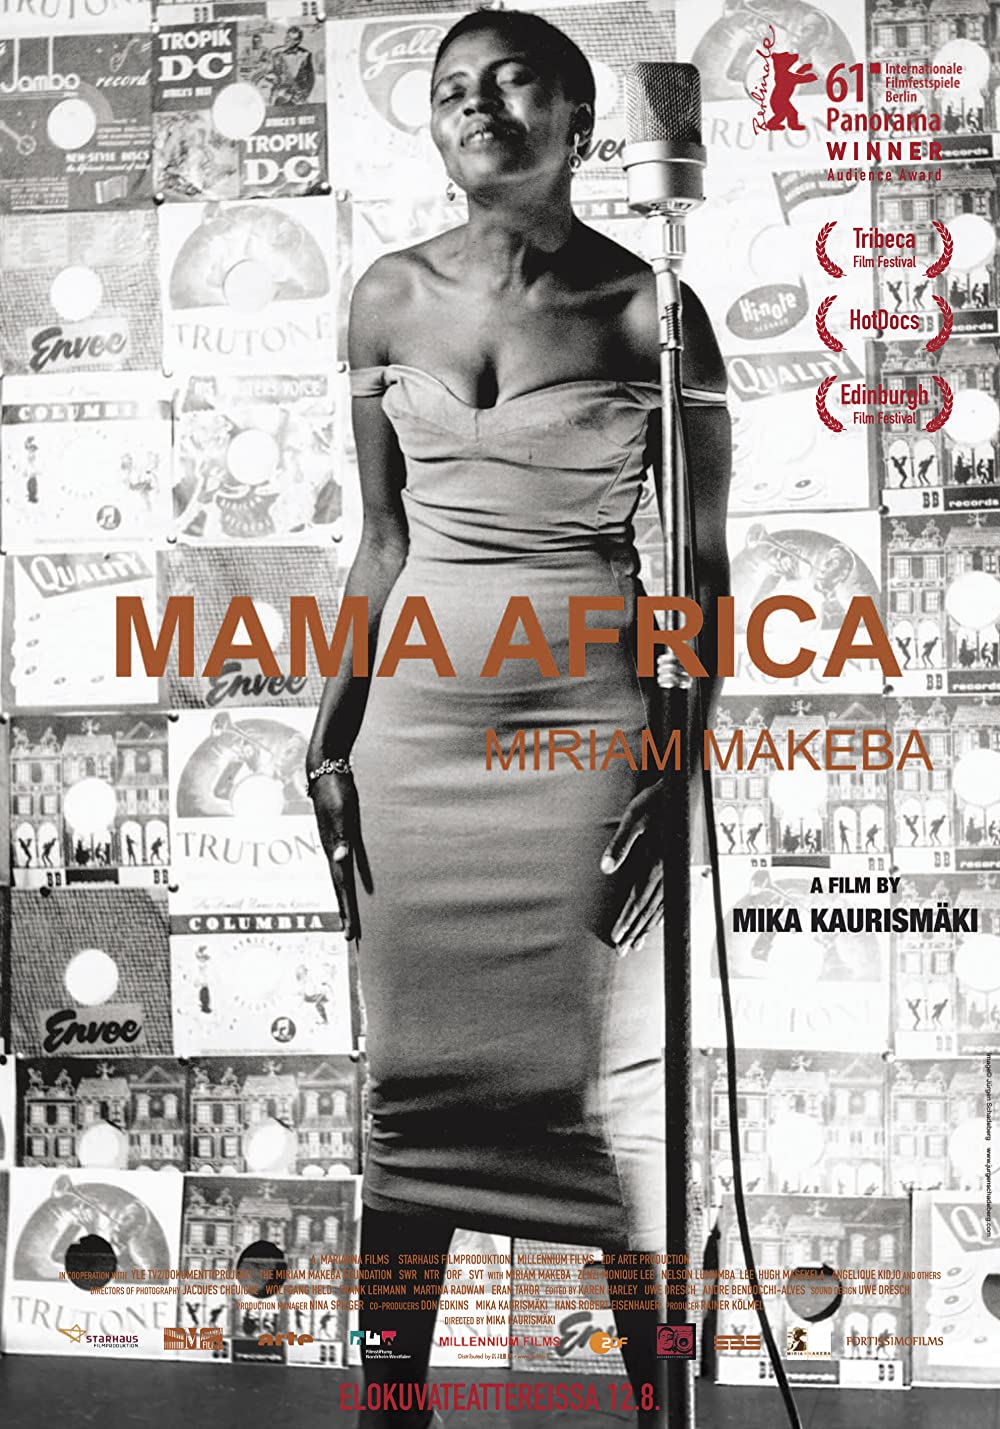 Filmbeschreibung zu Mama Africa - Miriam Makeba